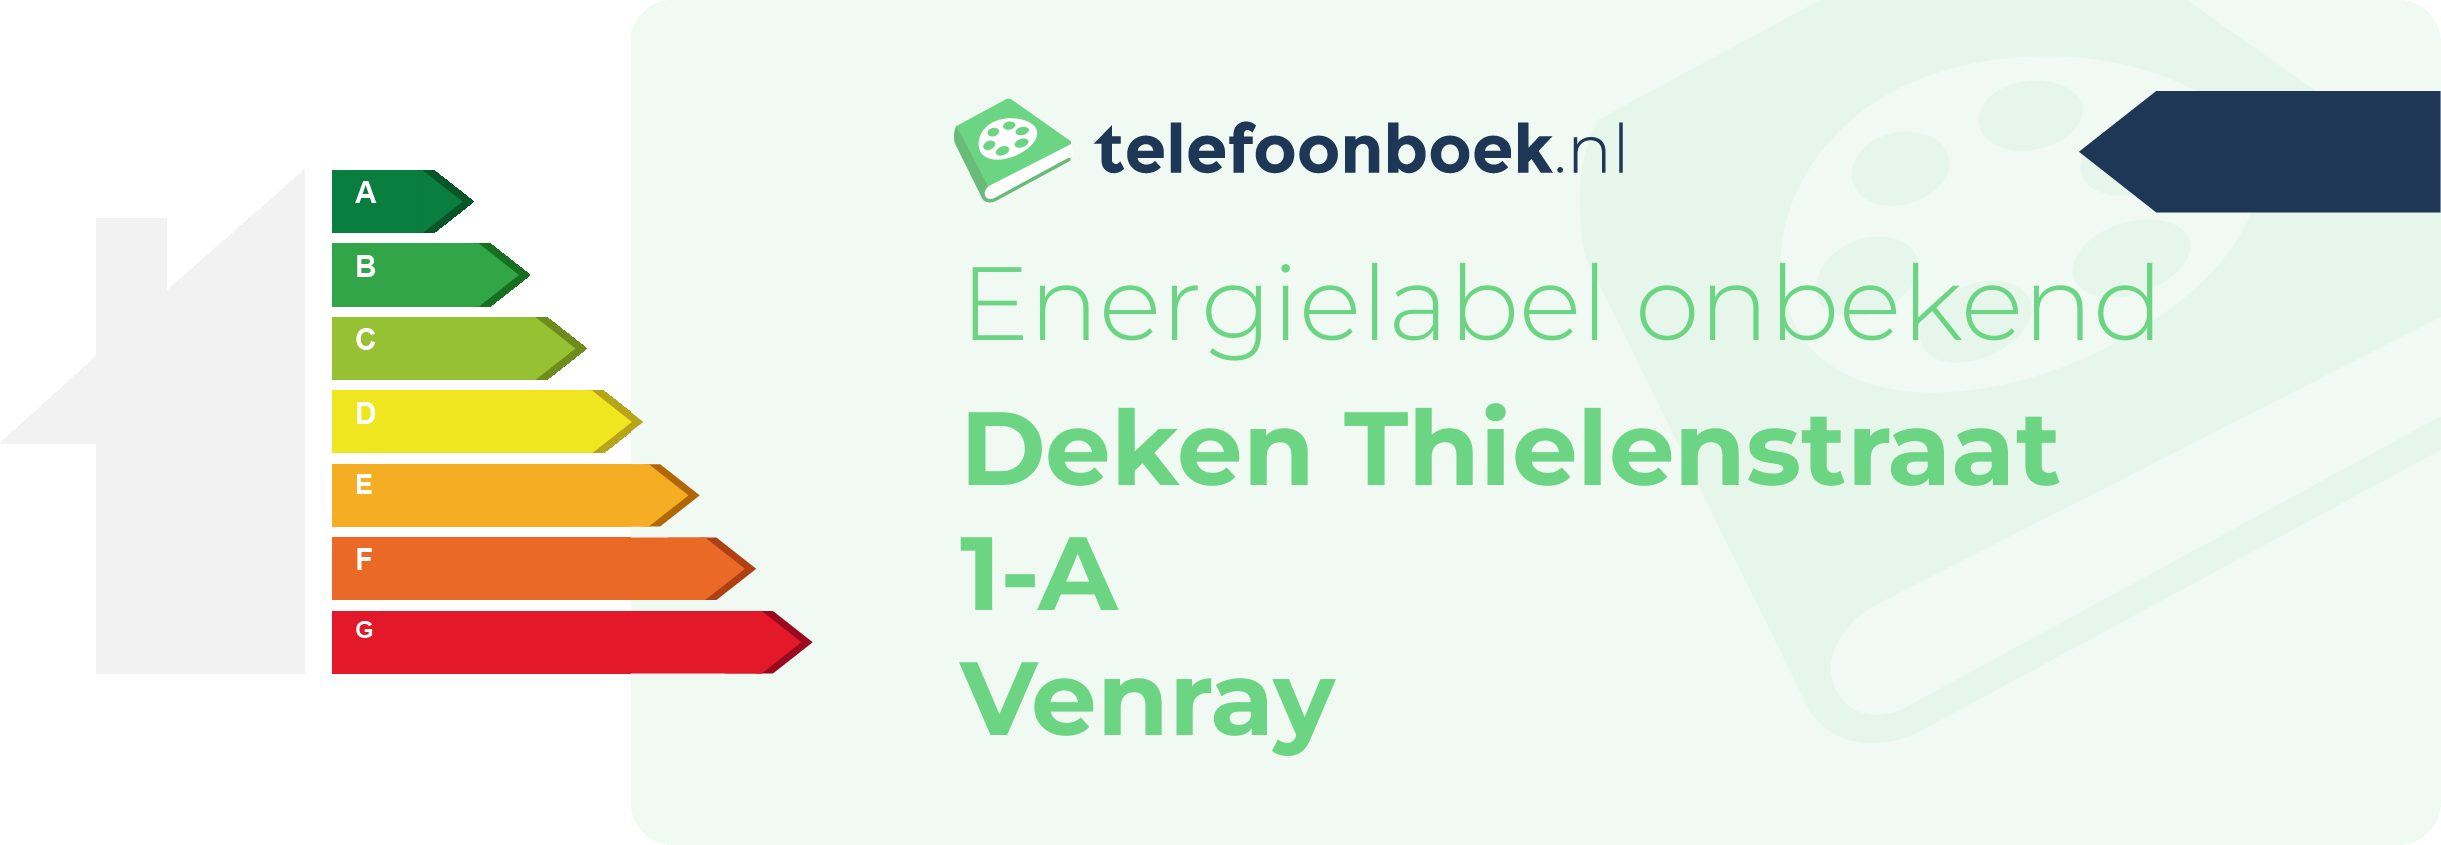 Energielabel Deken Thielenstraat 1-A Venray